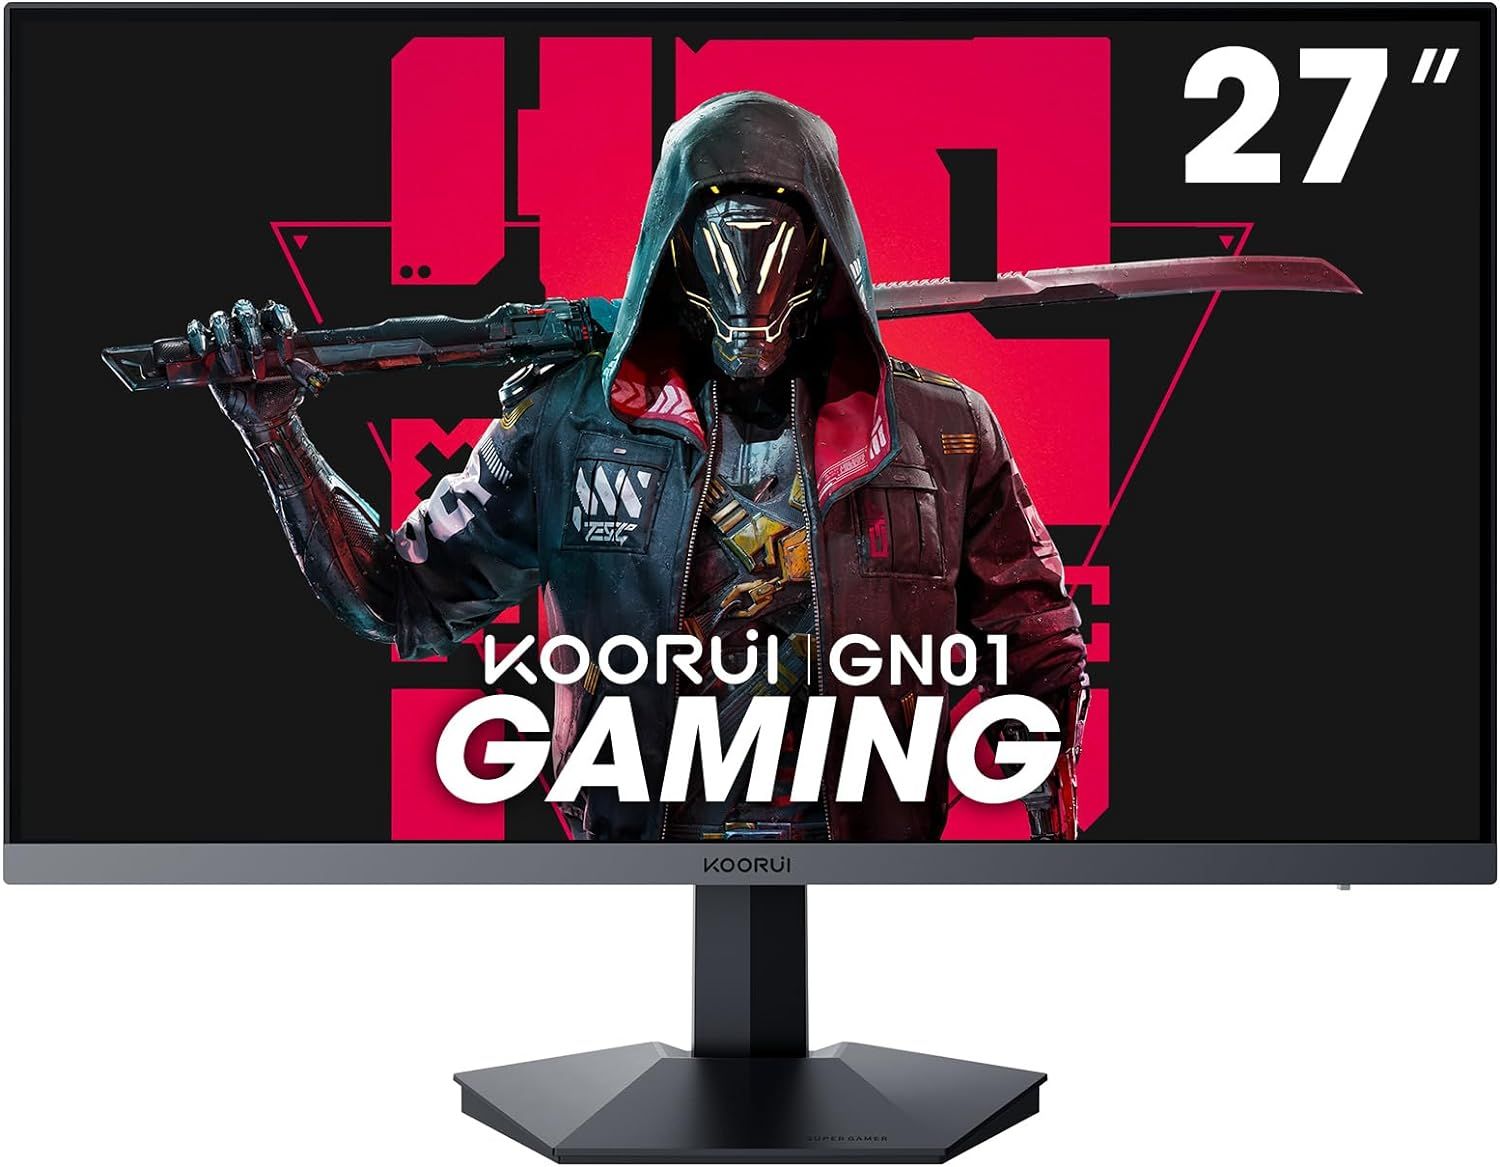 KOORUI 27-inch Gaming Monitor